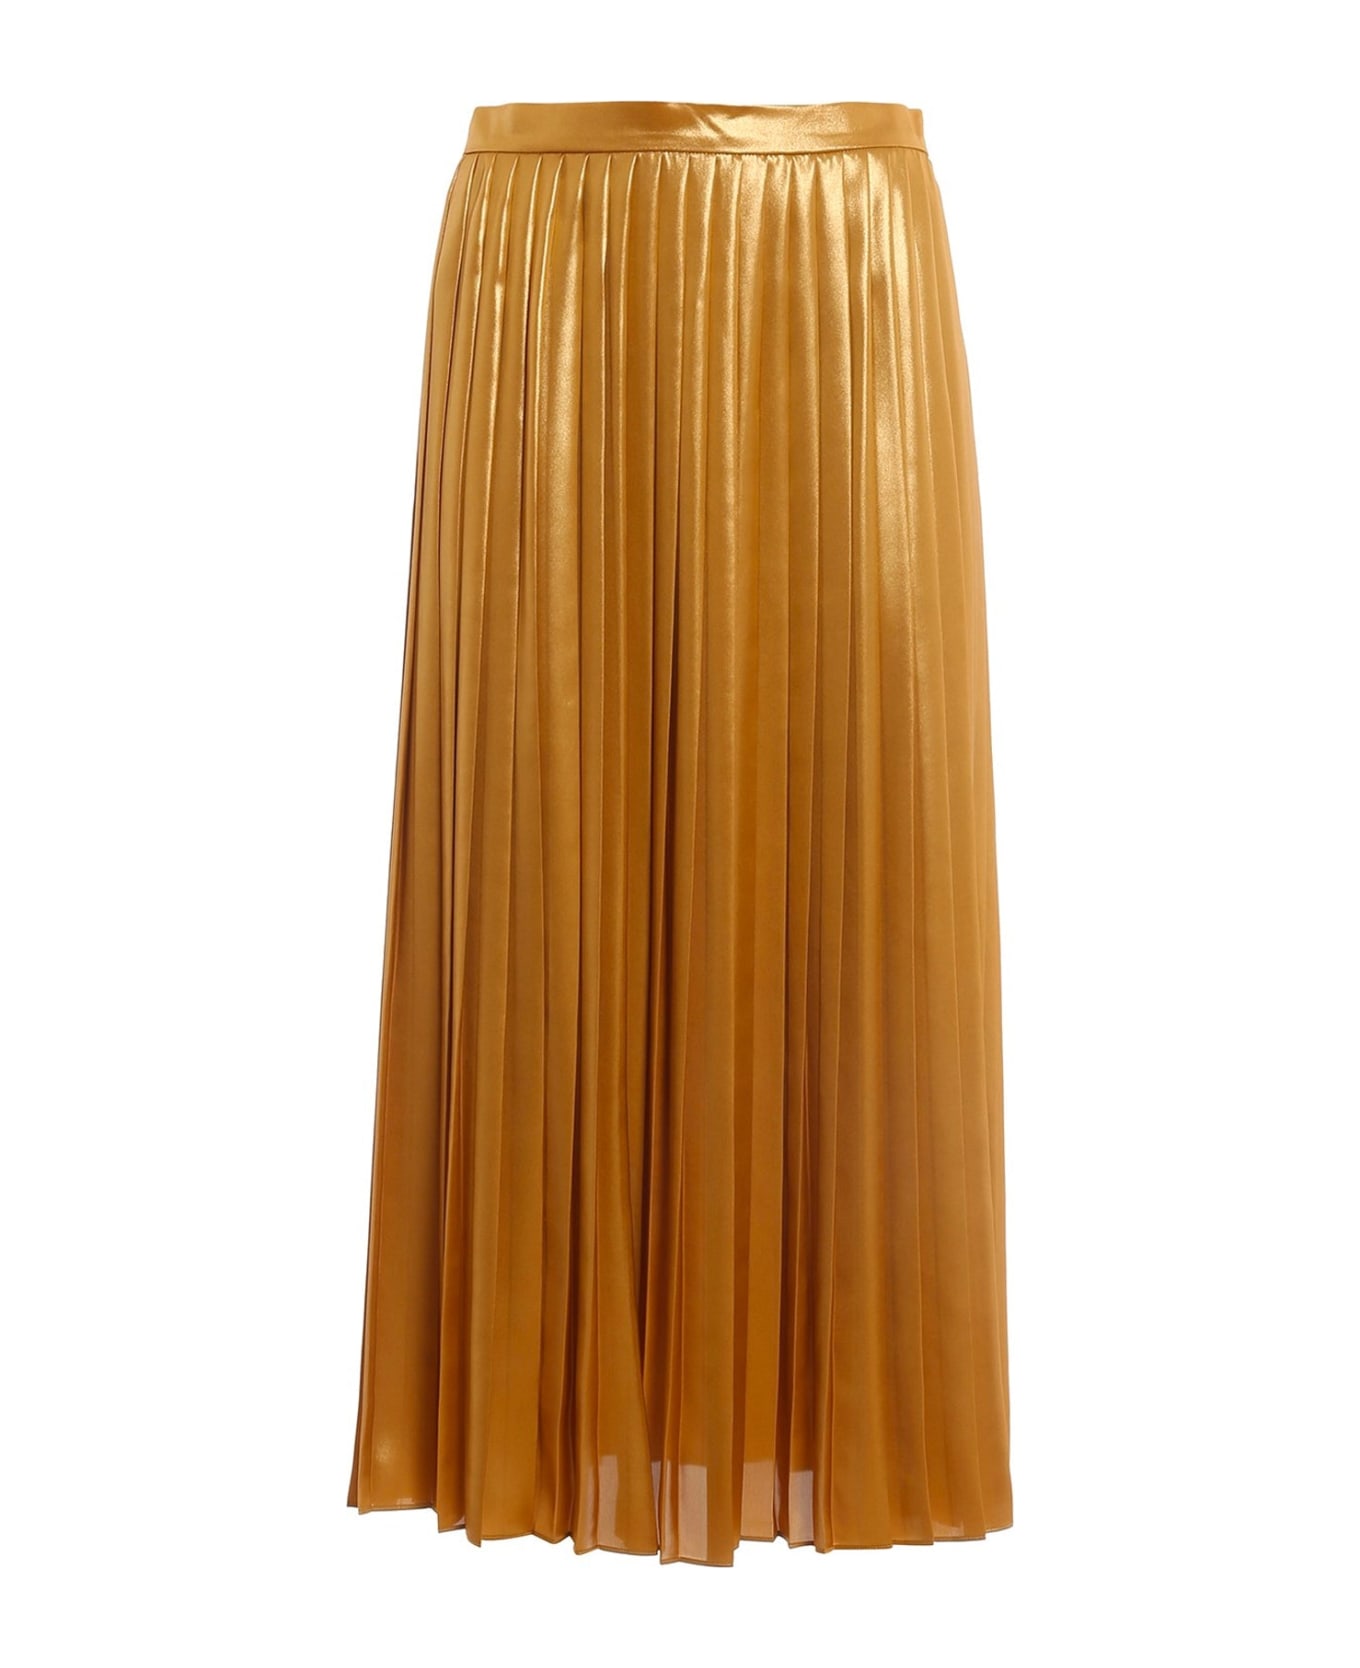 Max Mara Studio Studio Fragola Skirt - Gold スカート